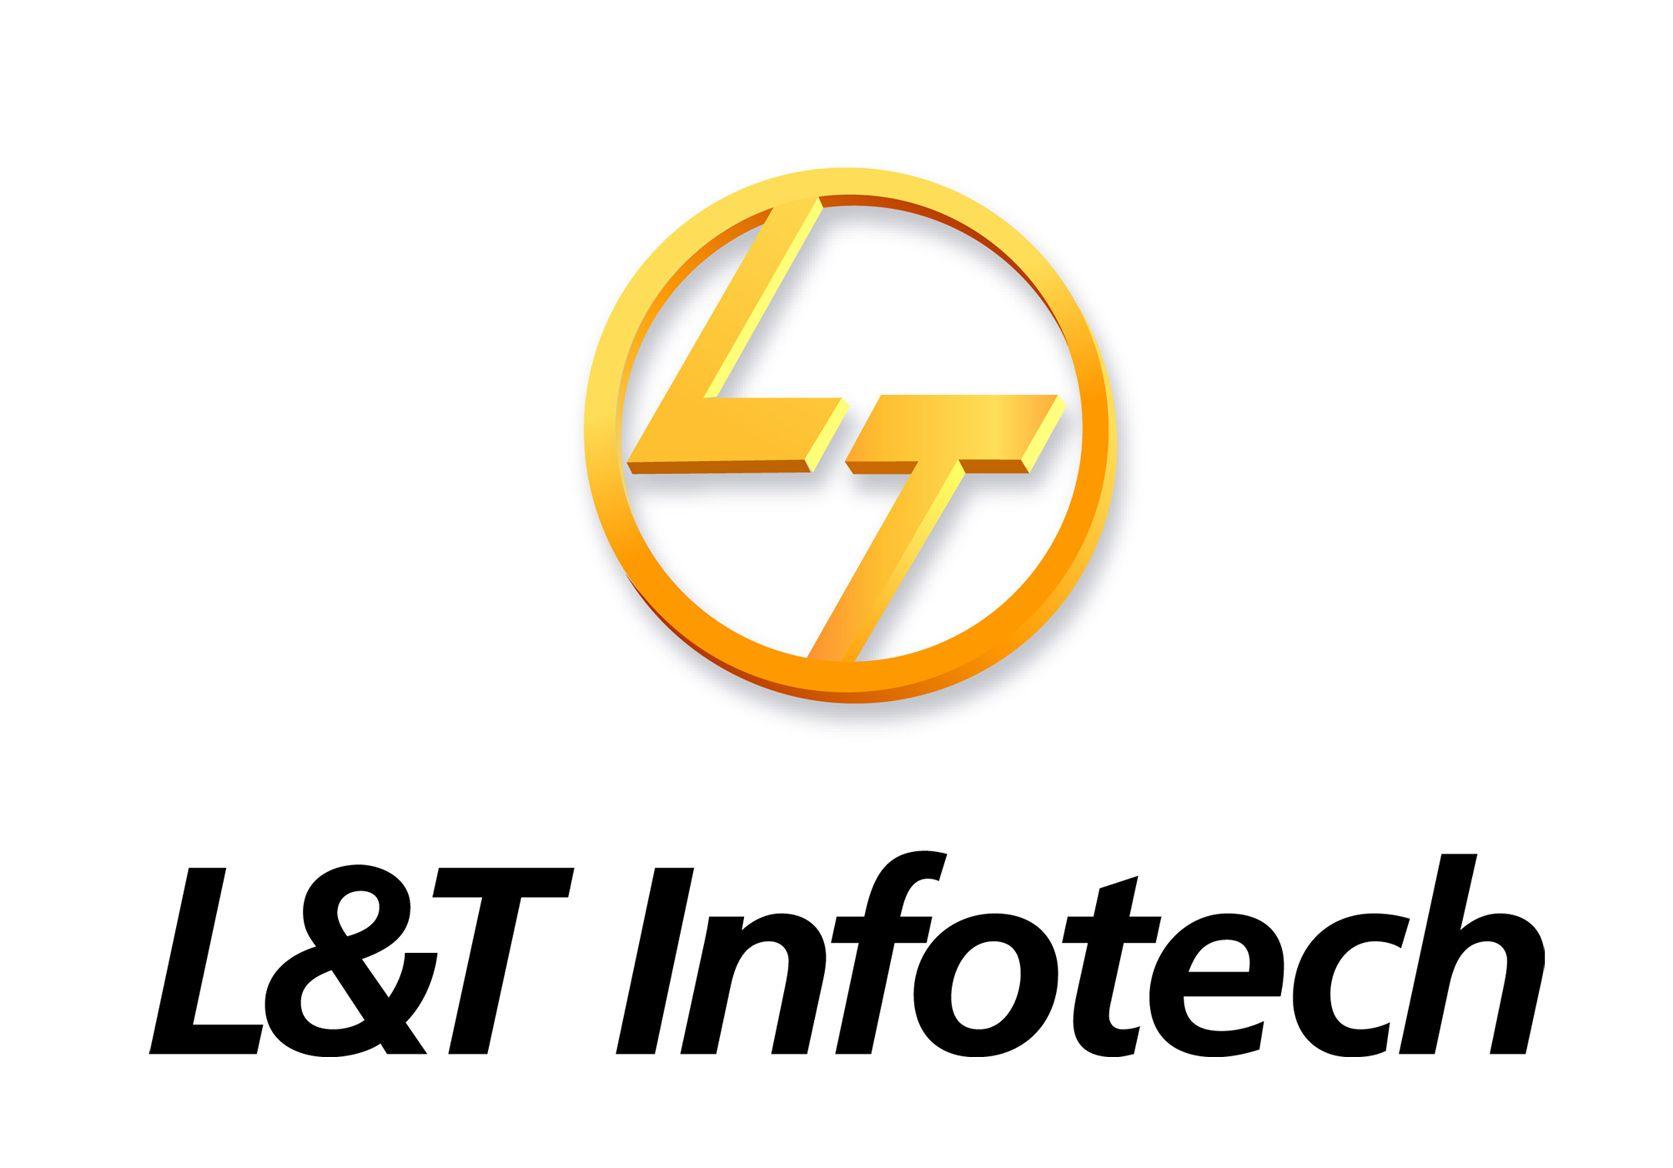 L&T Logo - File:L&T Infotech logo.jpg - Wikimedia Commons